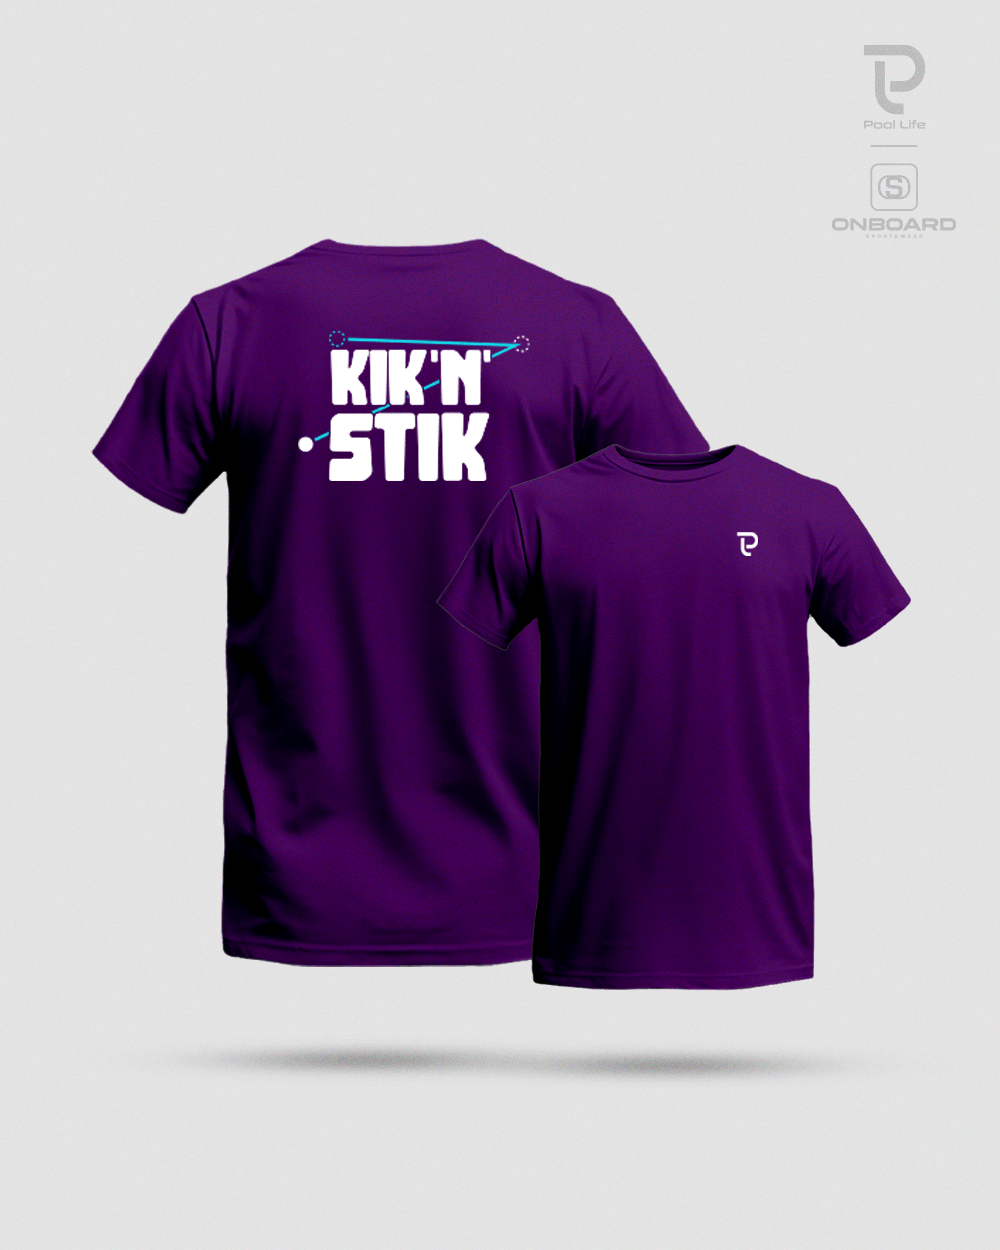 Pool Life KIK 'N' STIK Purple T Shirt